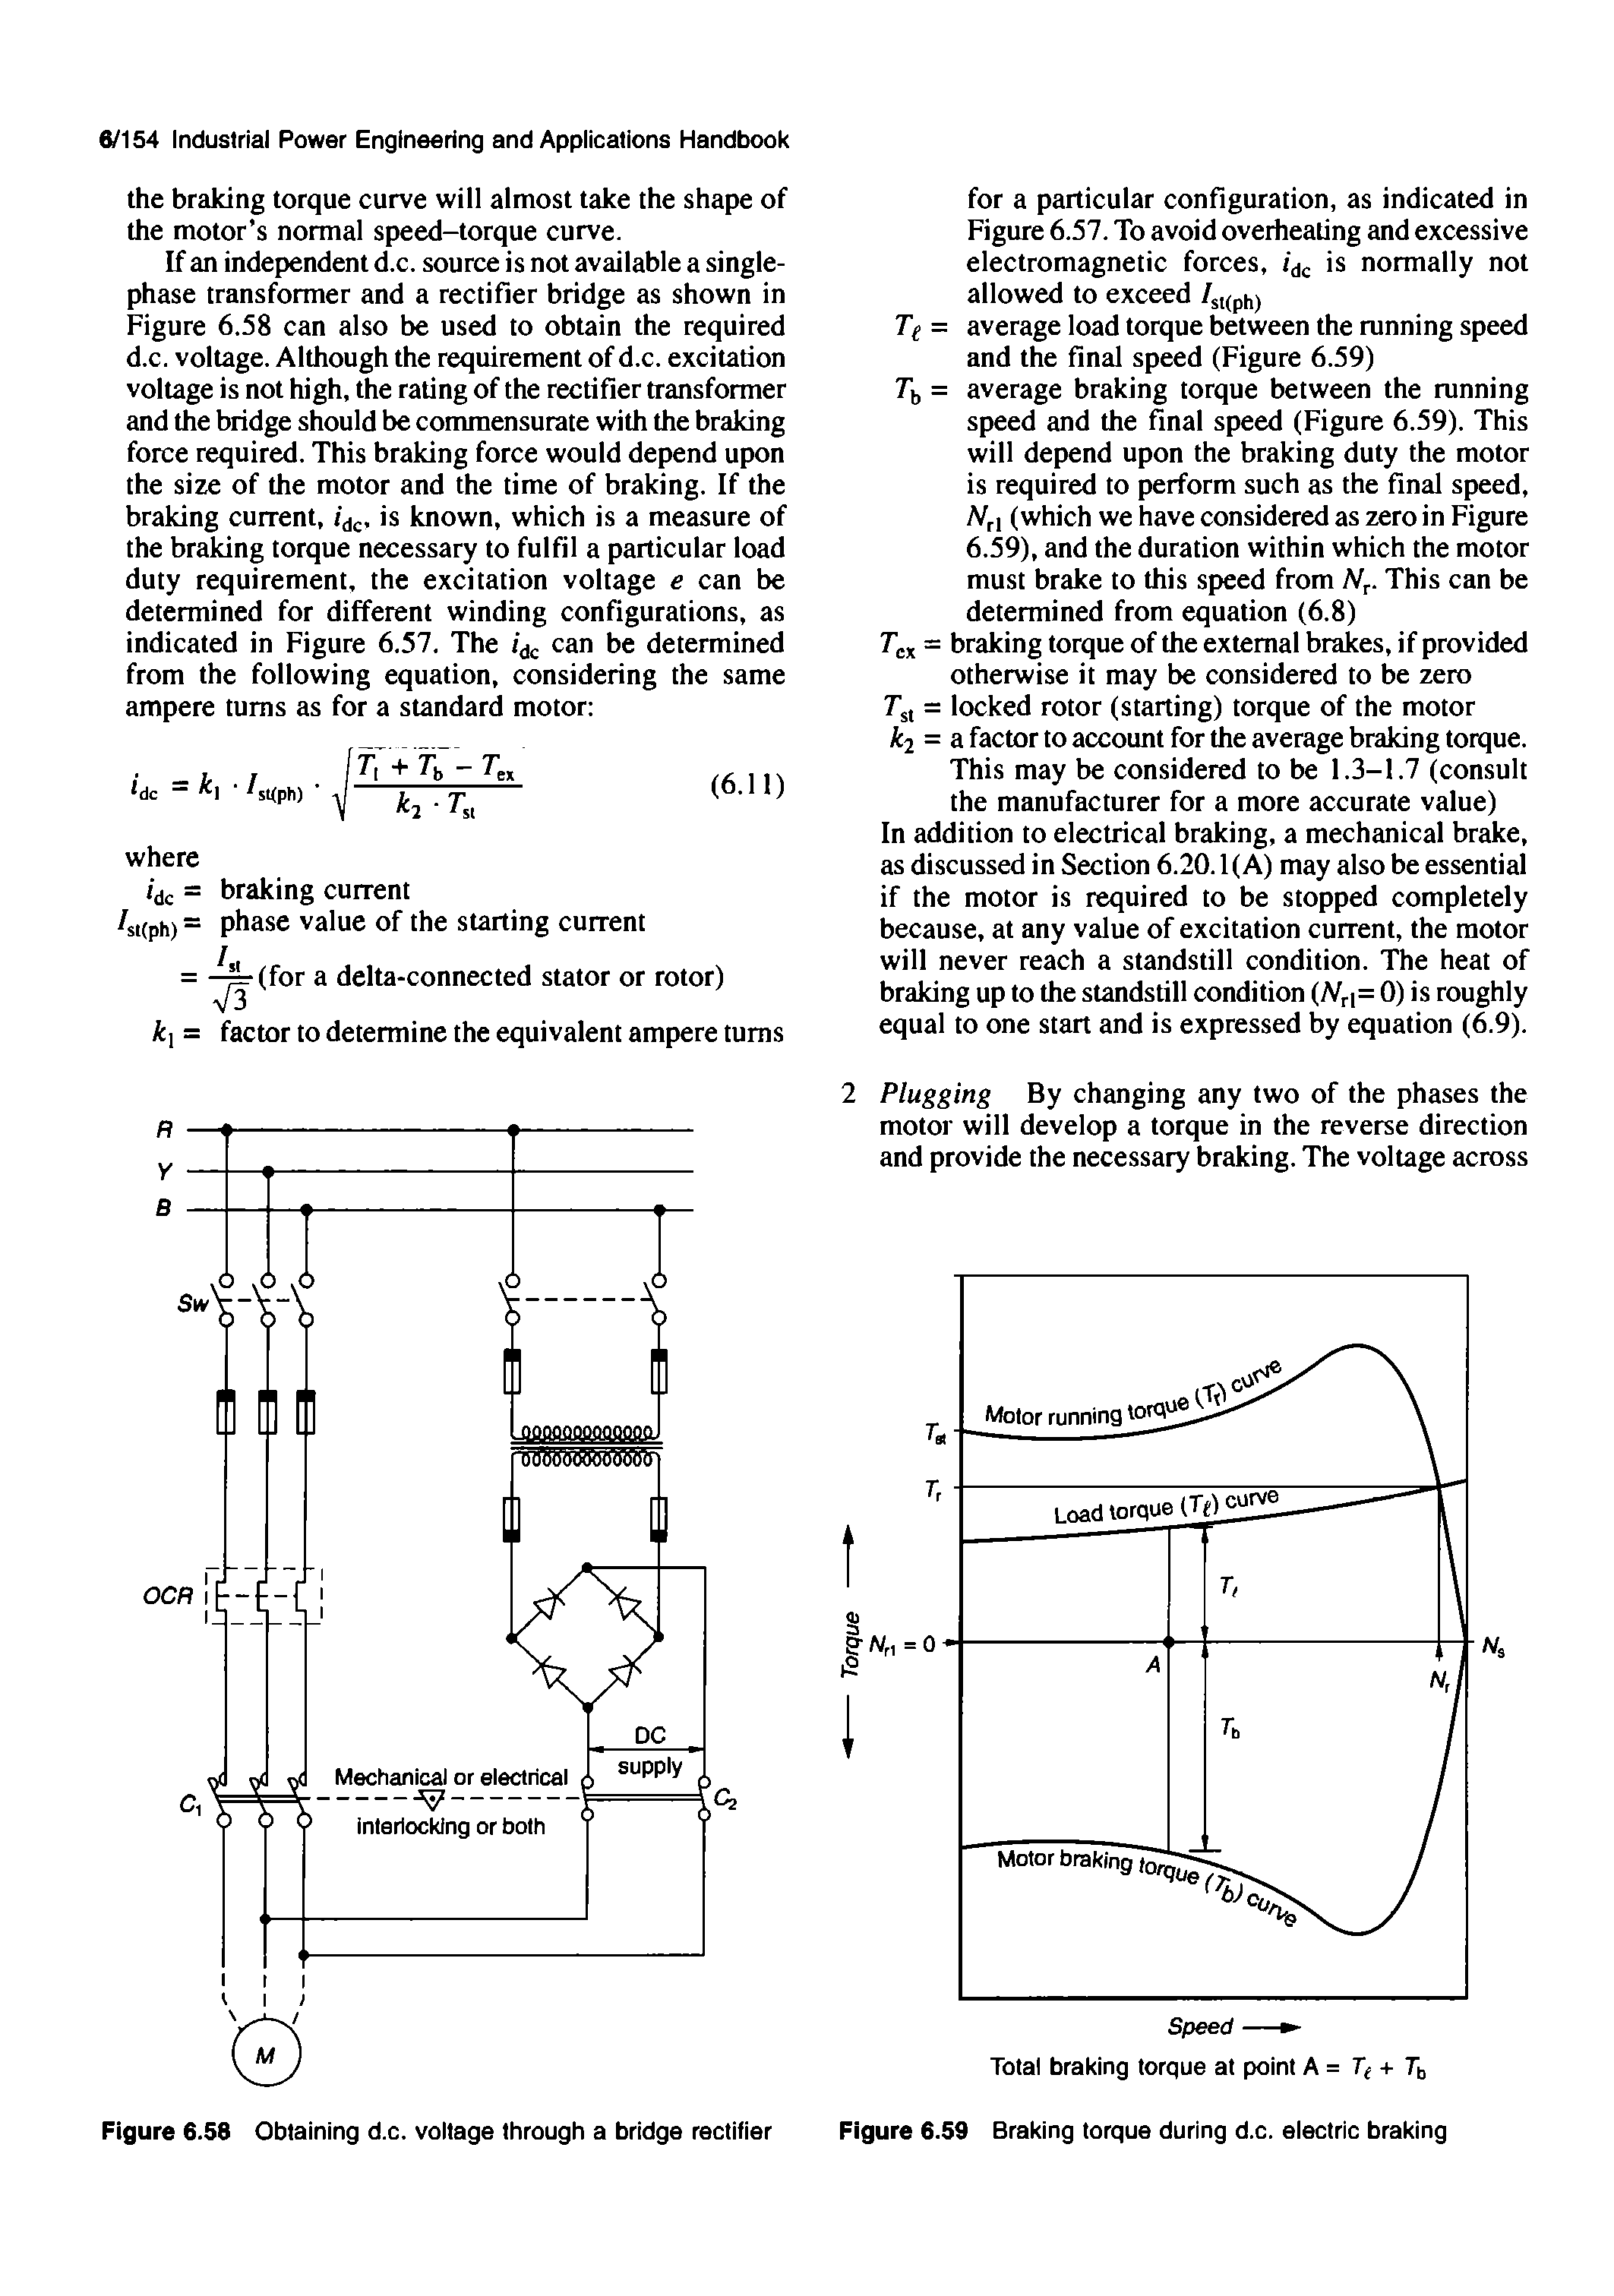 Figure 6.58 Obtaining d.c. voltage through a bridge rectifier Figure 6.59 Braking torque during d.c. electric braking...